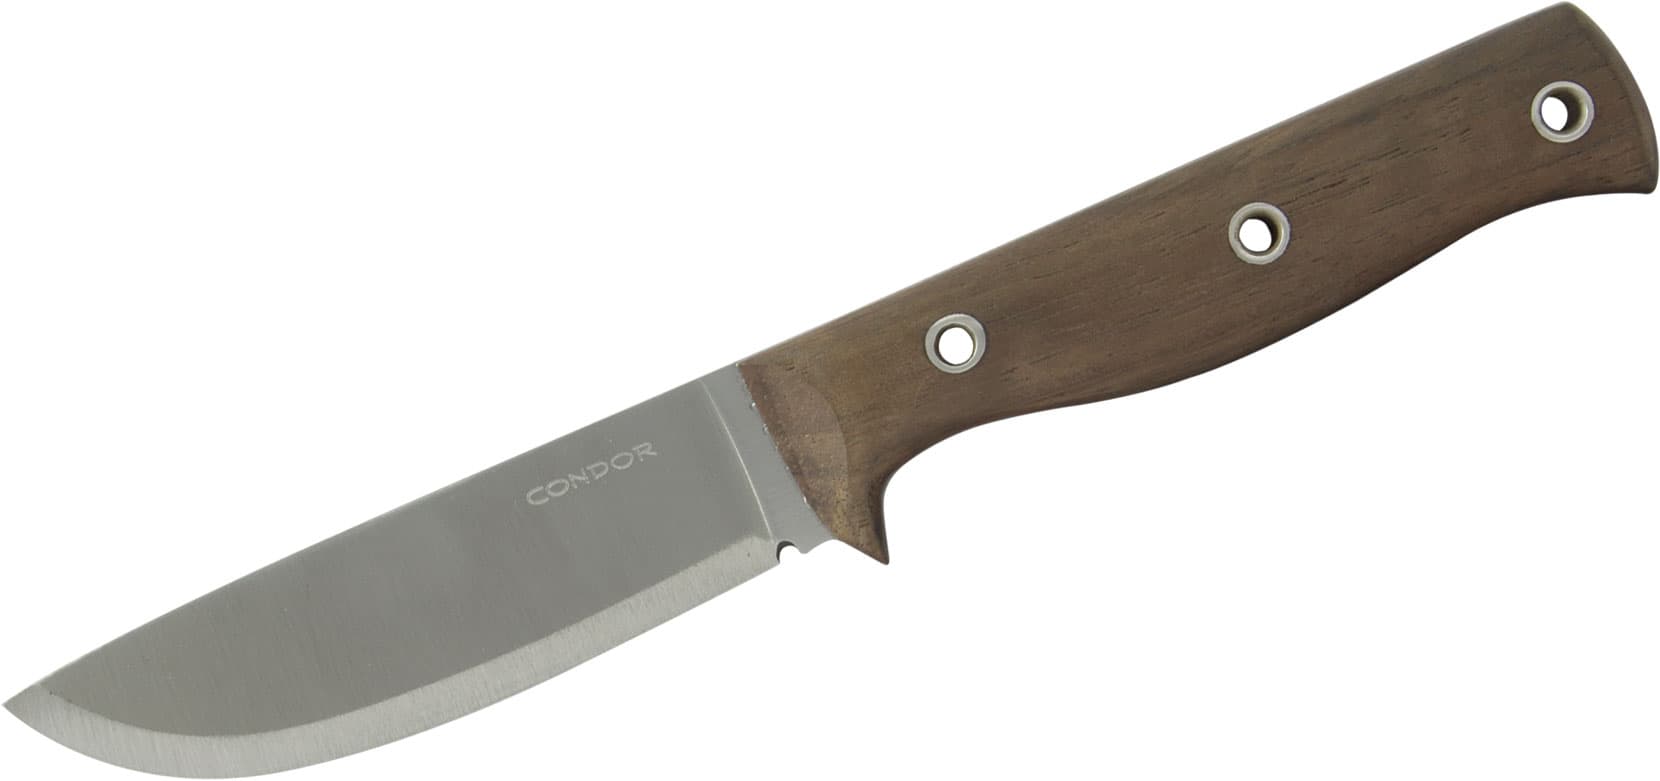 Condor Swamp Romper Knife CTK3900-4.5HC